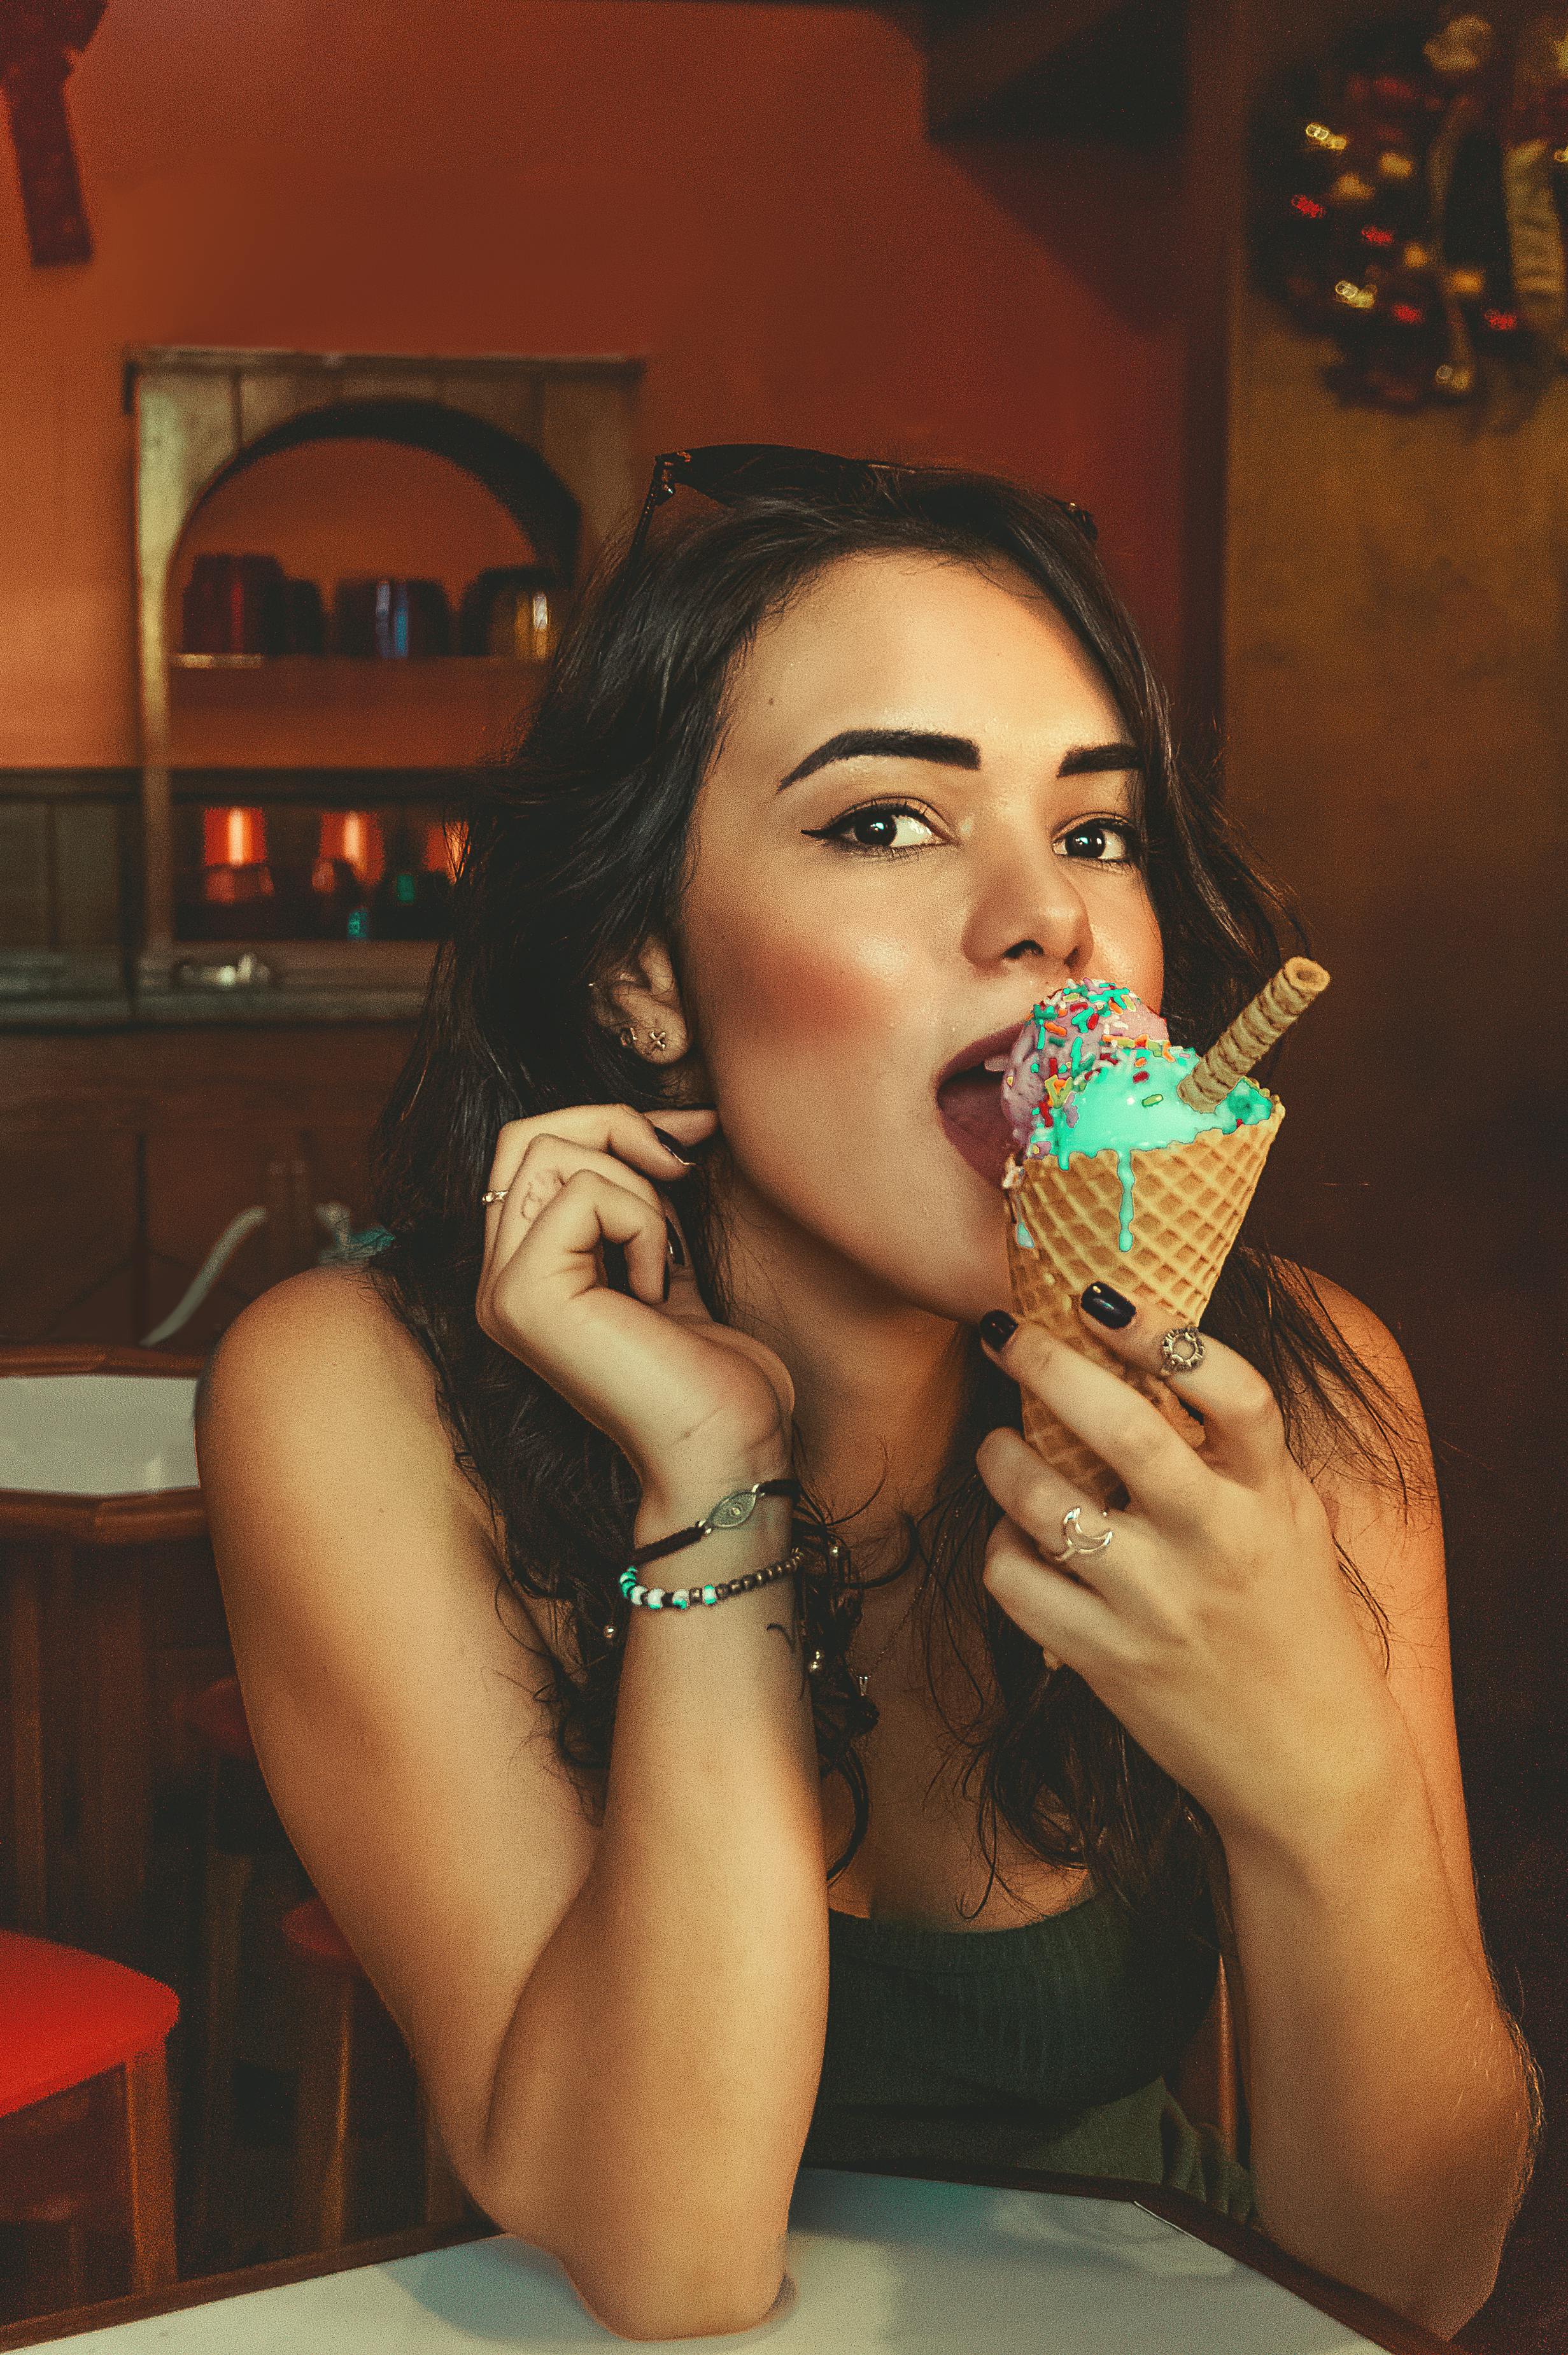 Photo Of Woman Eating Ice Cream · Free Stock Photo